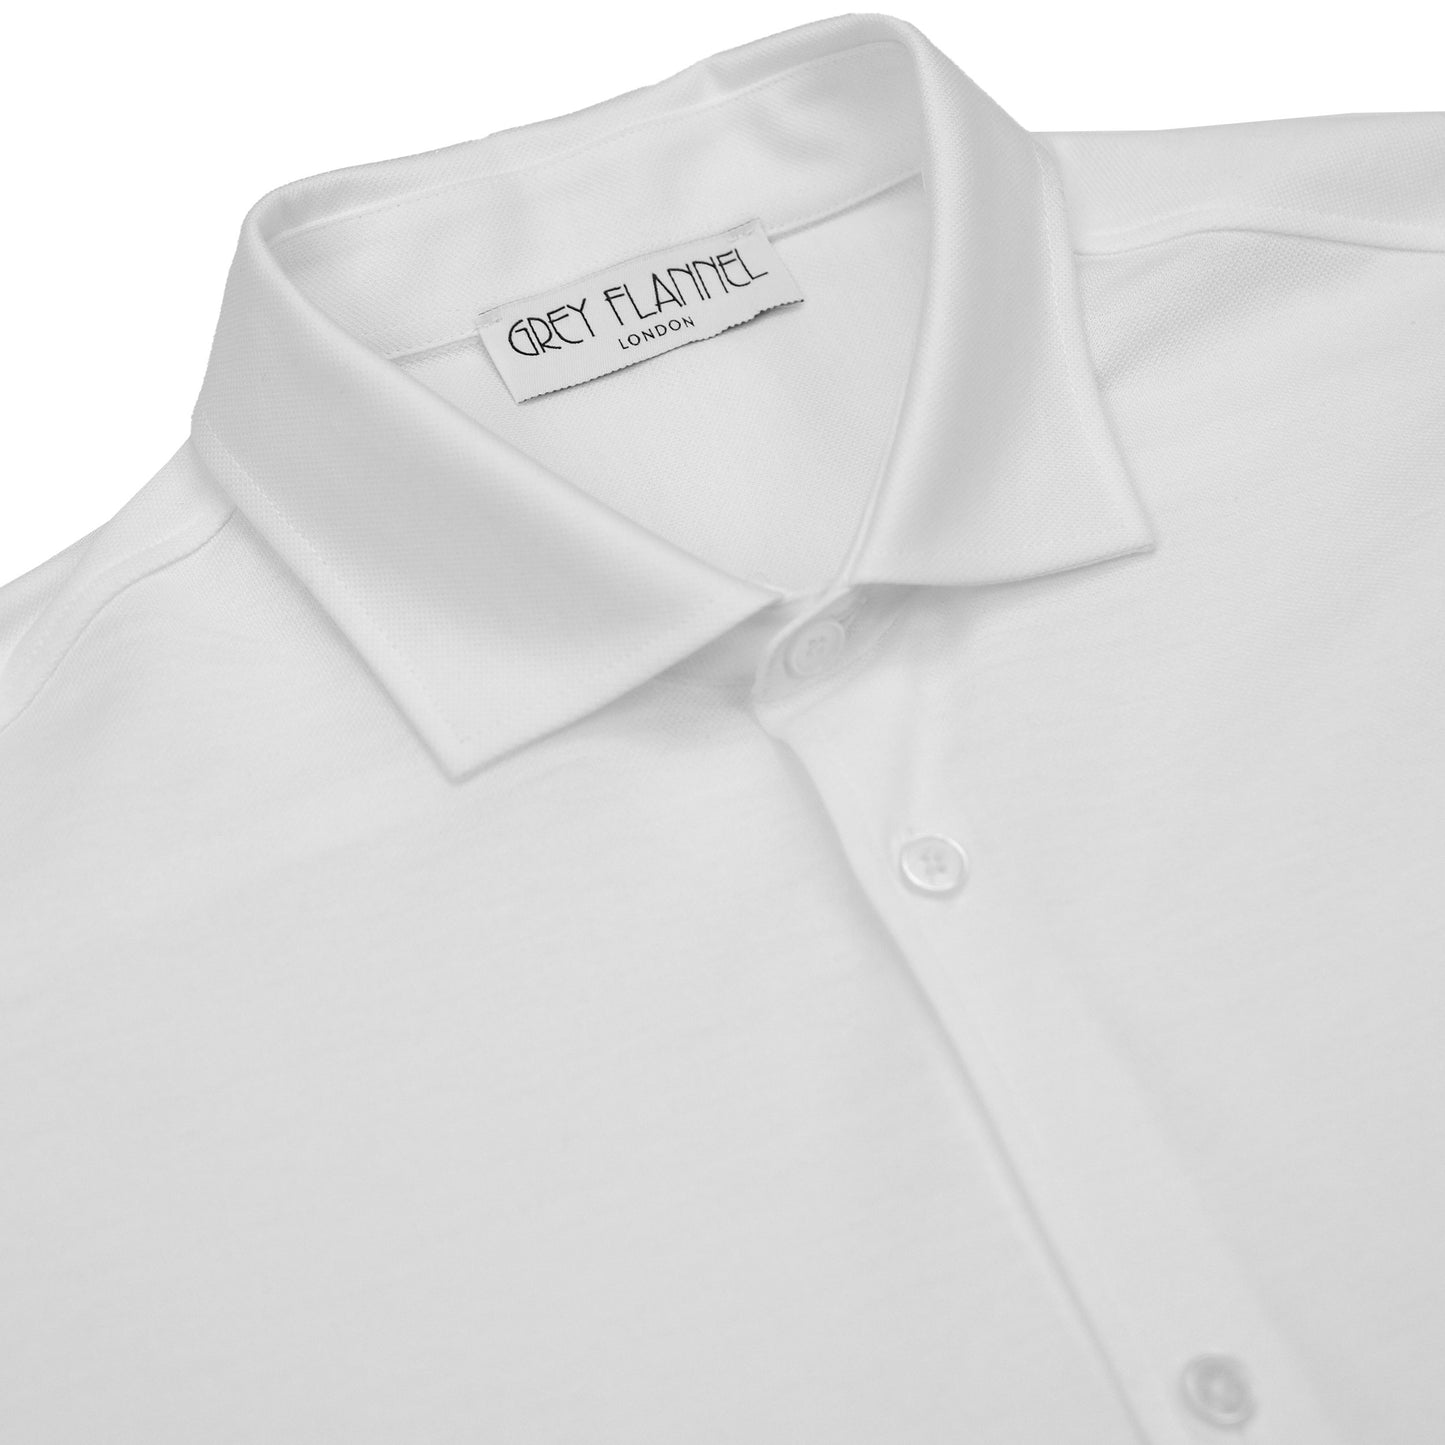 Grey Flannel - White Pique Shirt L/S